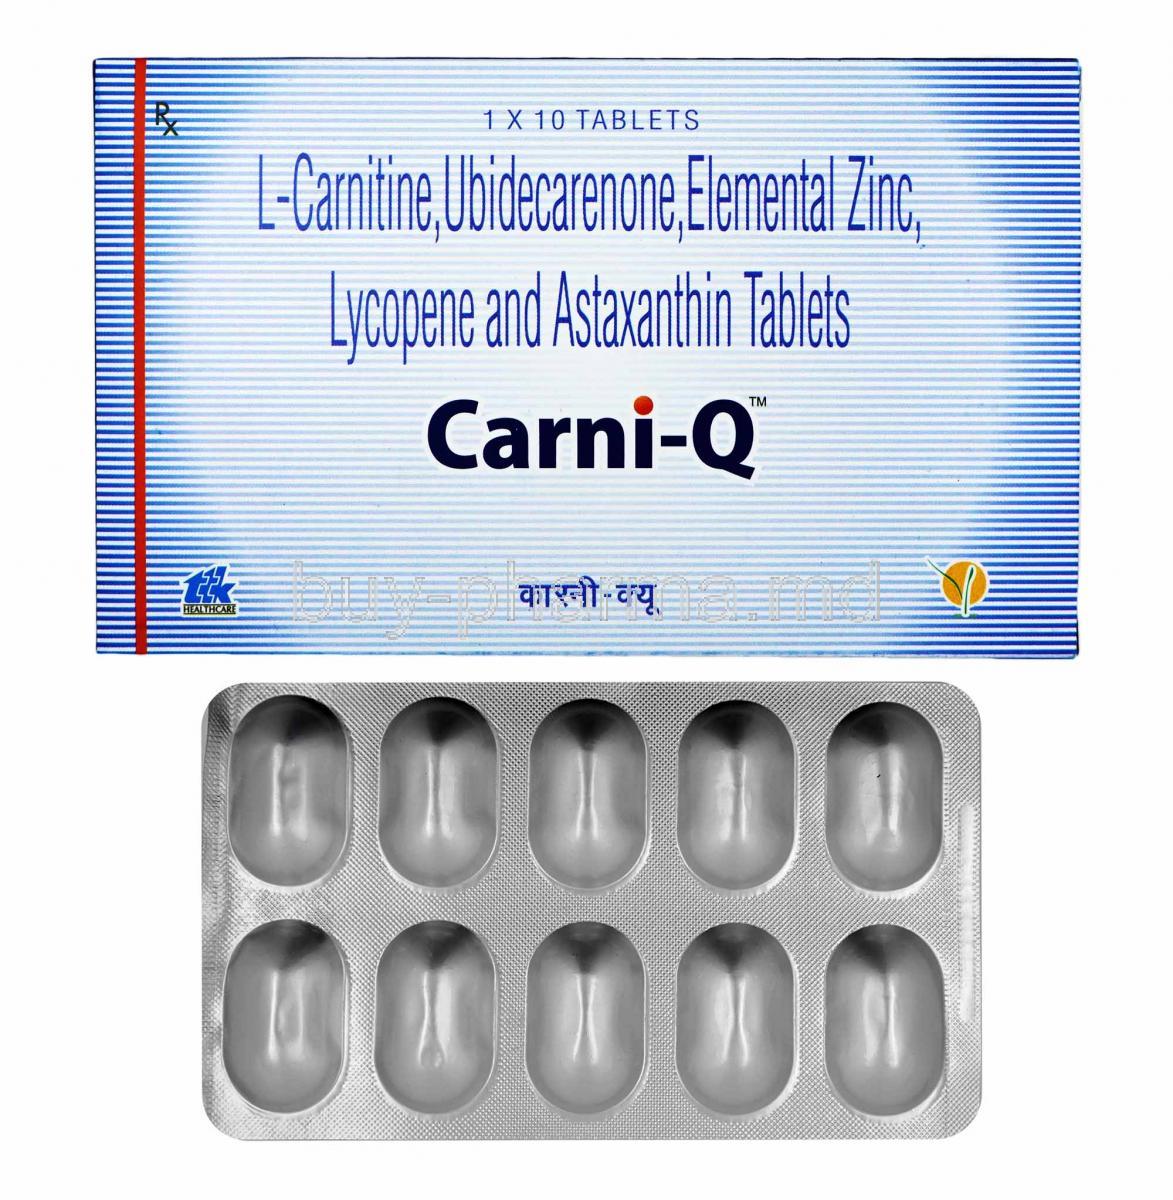 Carni-Q box and tablets